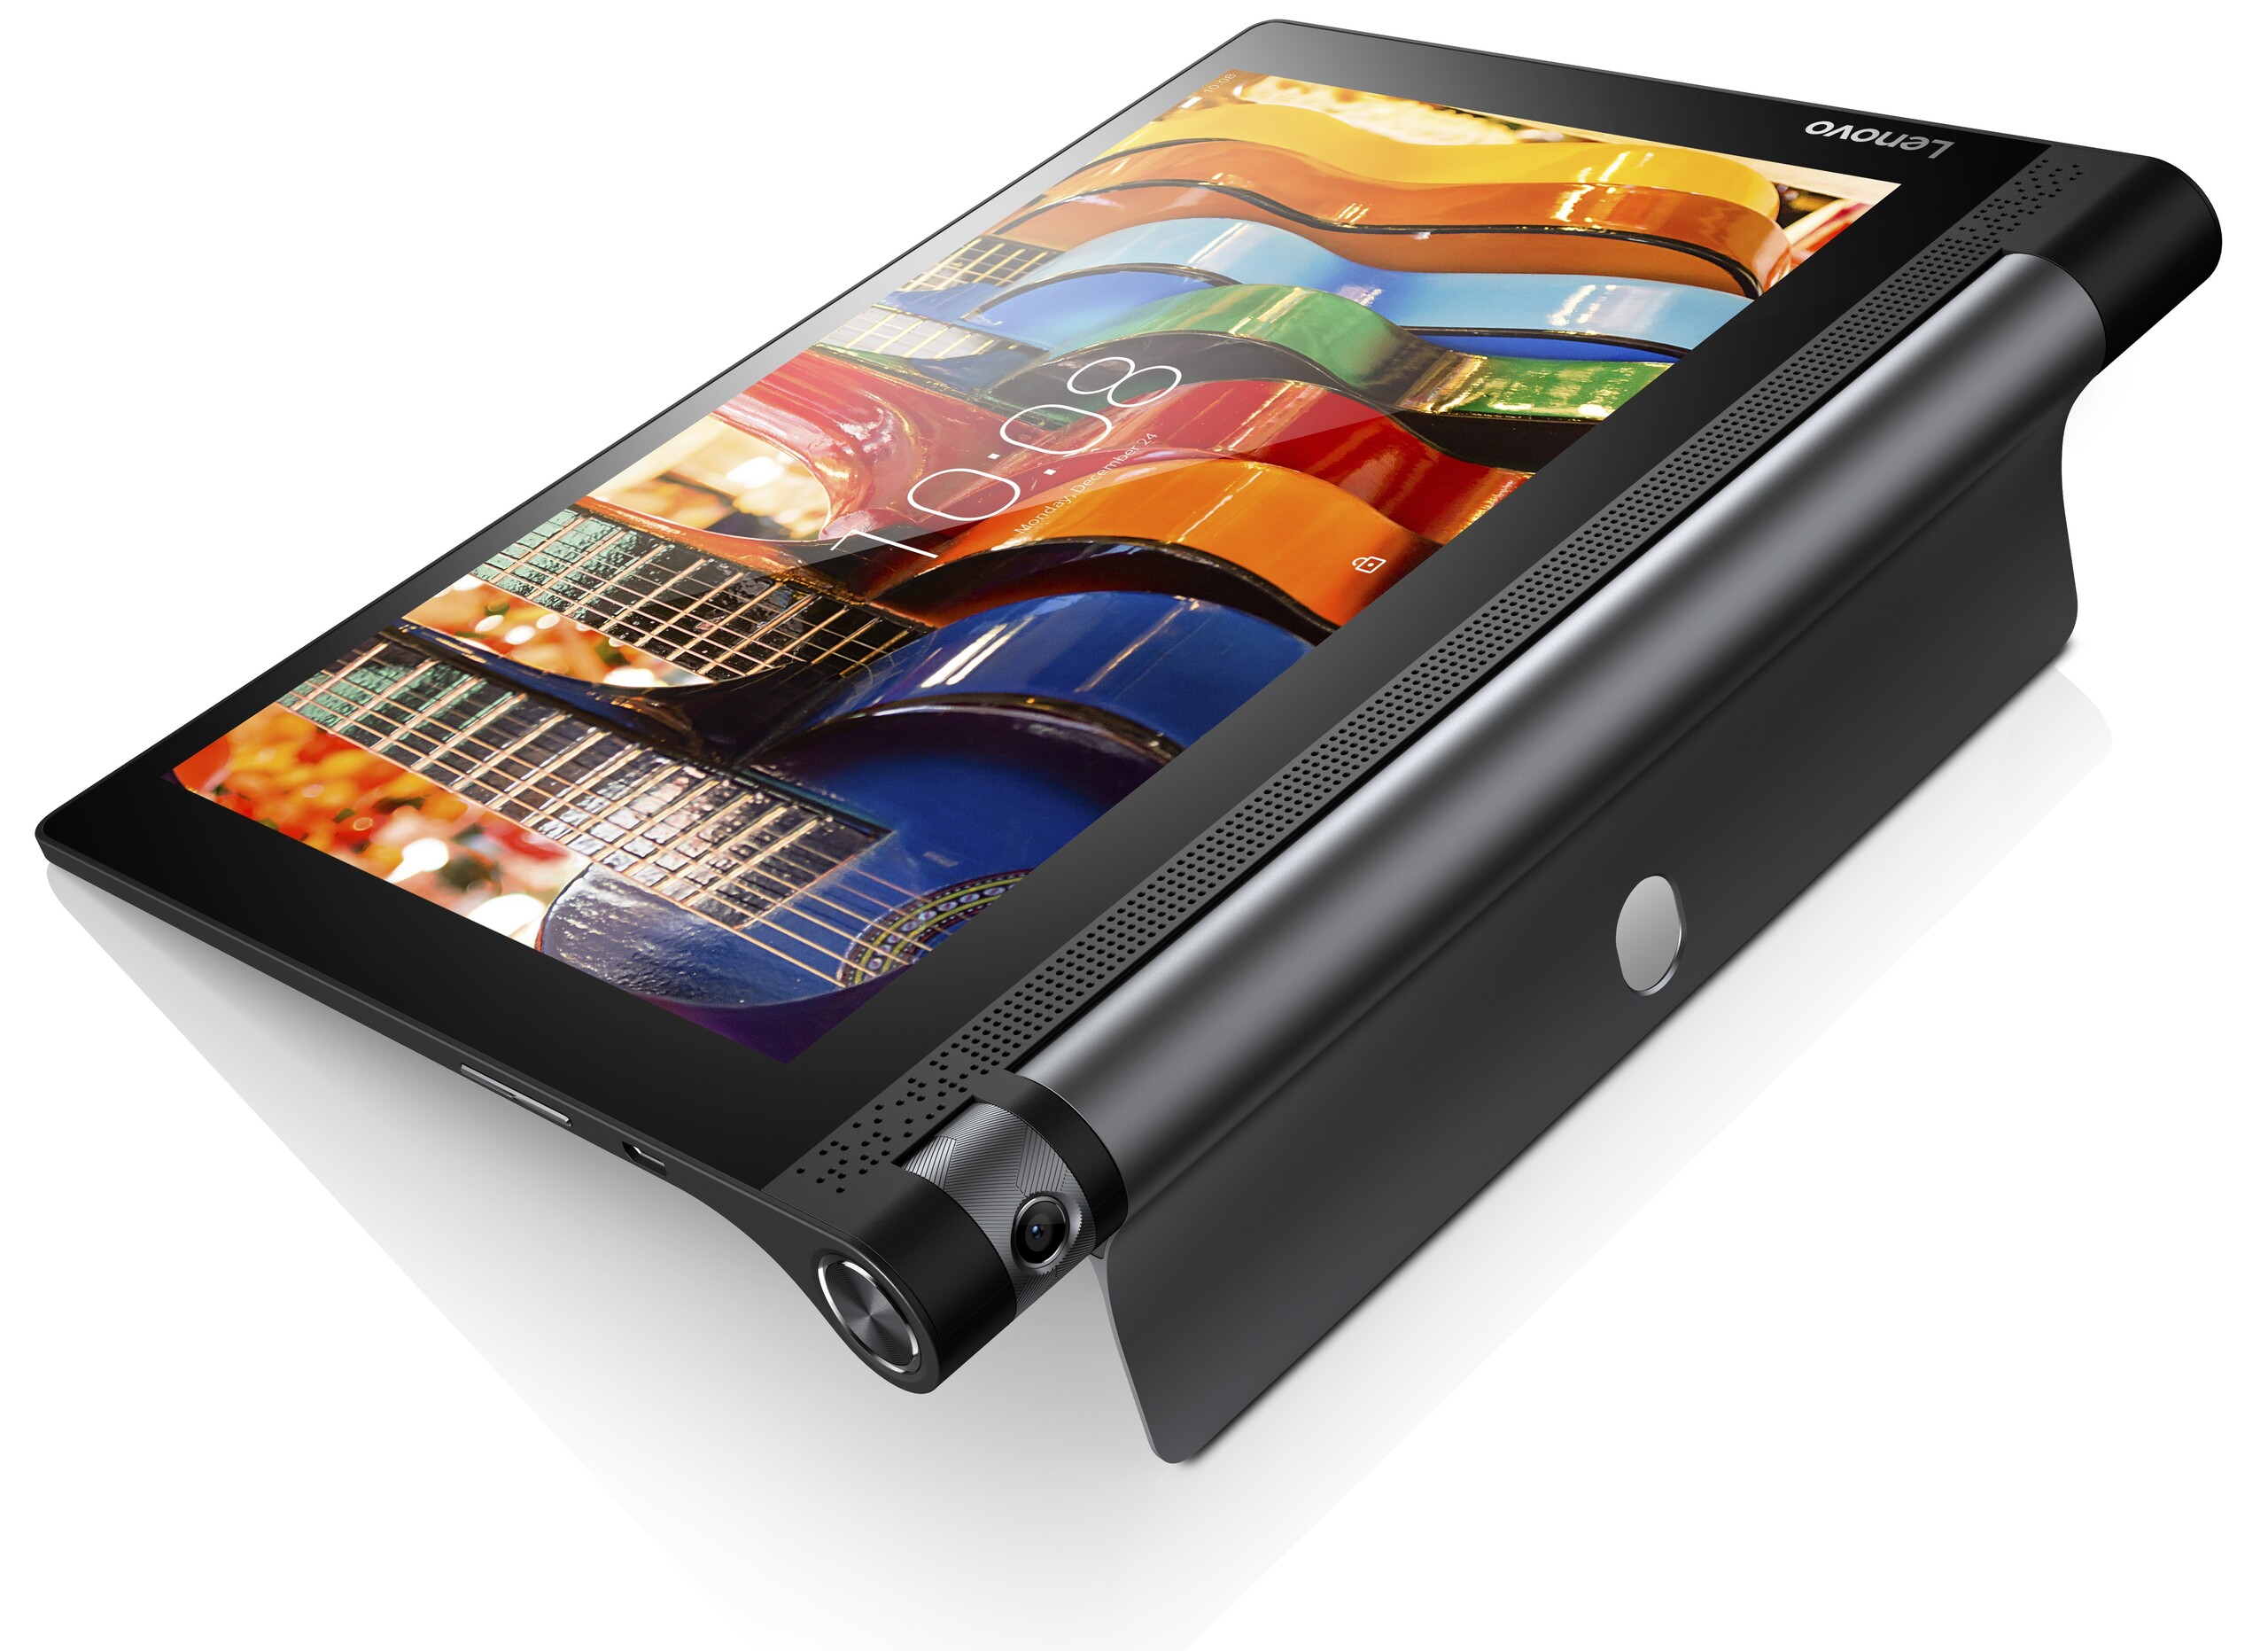 Lenovo Yoga Tab 3 10 Tablet Review - NotebookCheck.net Reviews